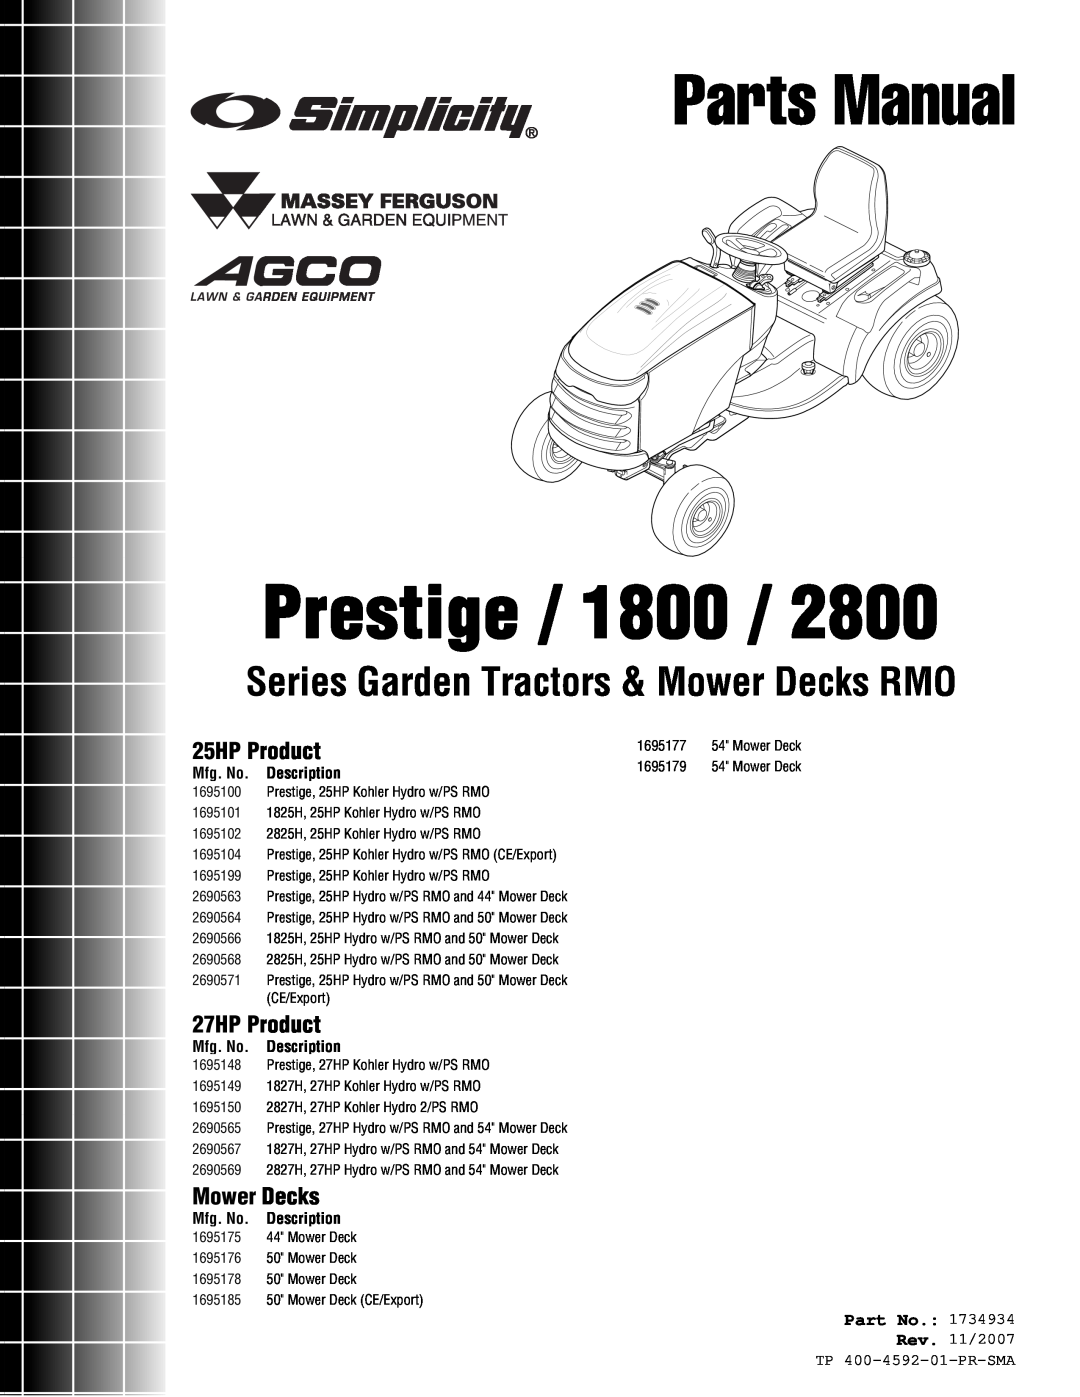 Simplicity 1800 Series manual 25HP Product, 27HP Product, Mower Decks, Part No, Mfg. No. Description, Parts Manual 